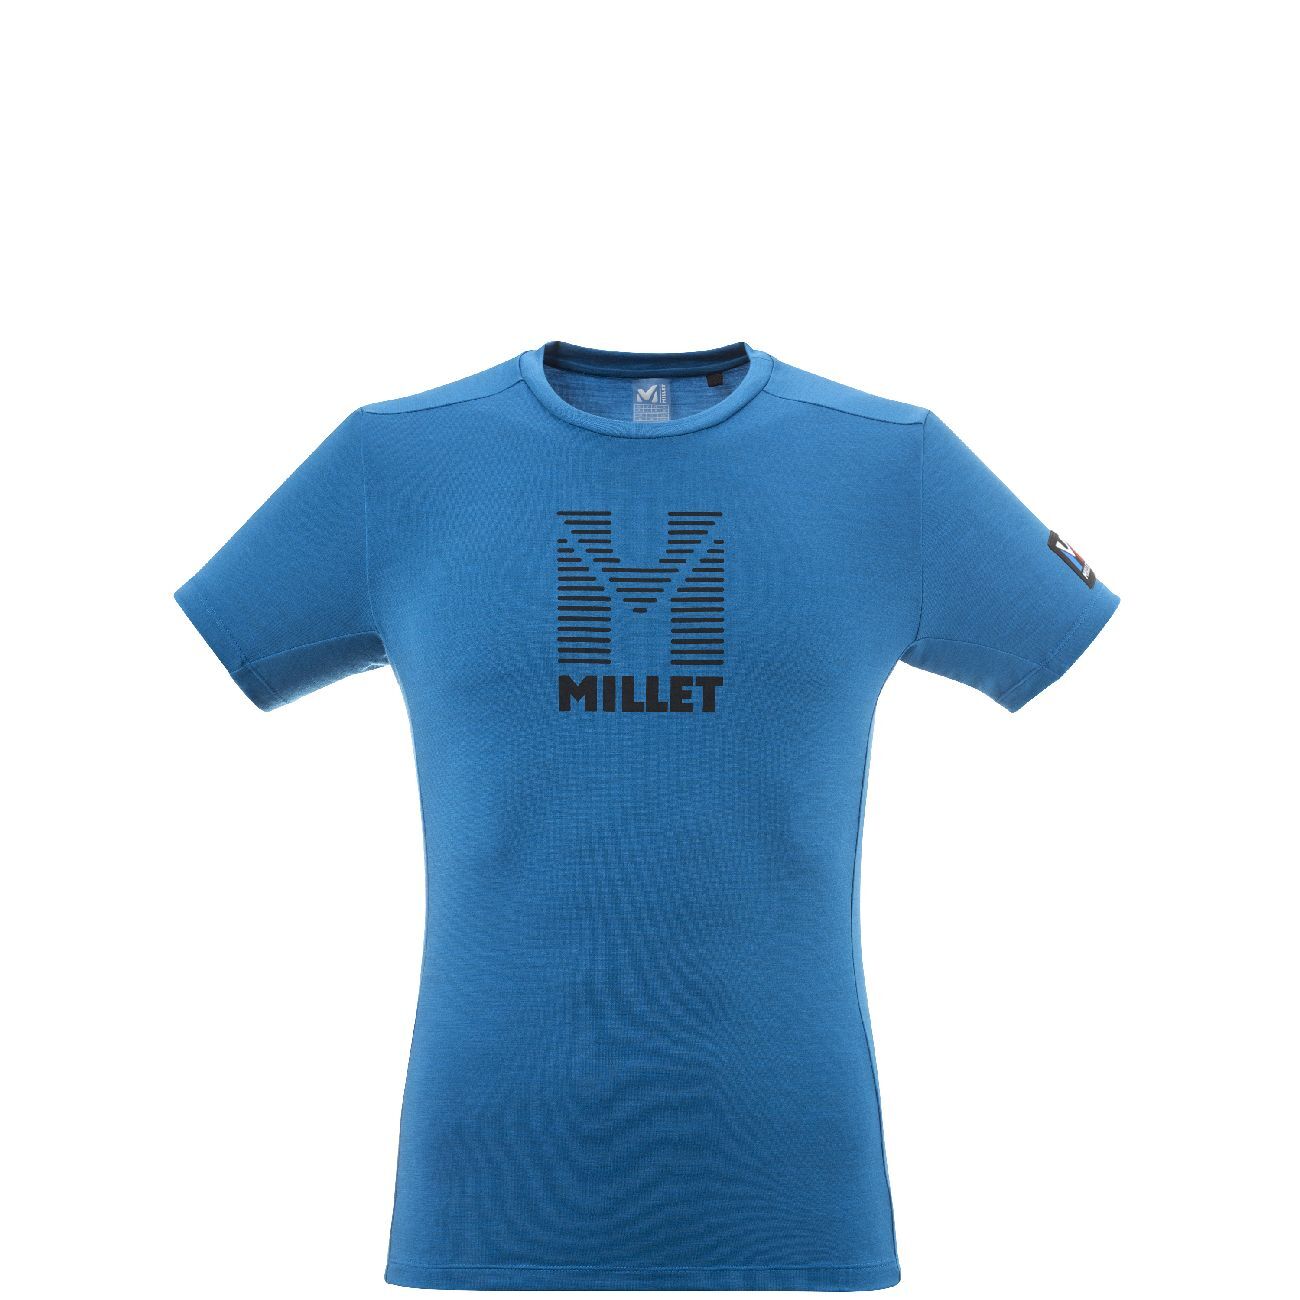 Millet Trilogy Wool Stripes - T-shirt - Men's